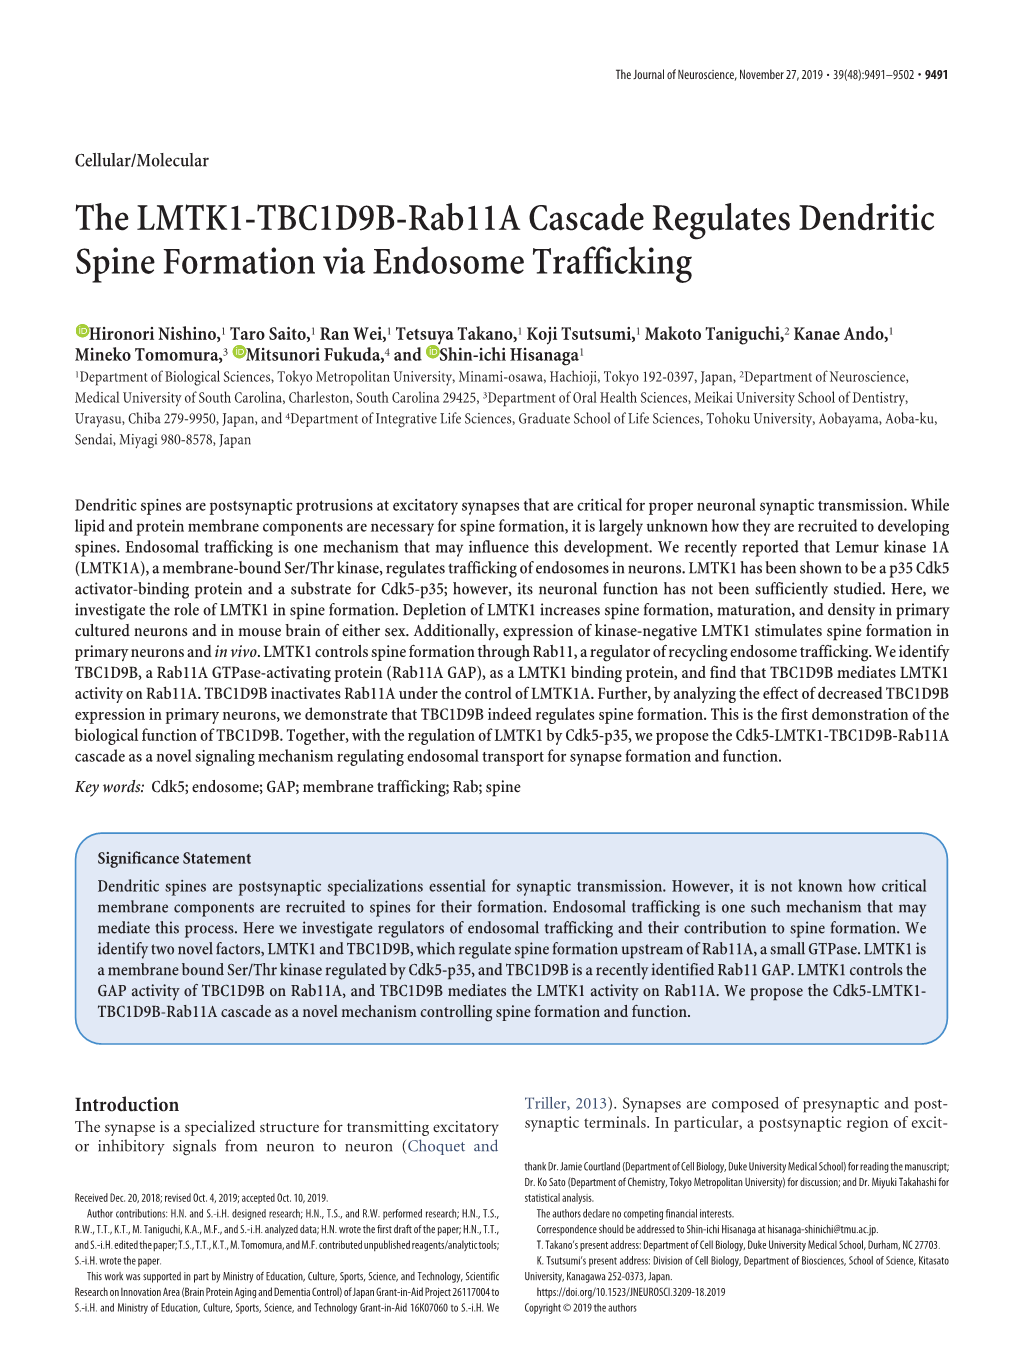 The LMTK1-TBC1D9B-Rab11a Cascade Regulates Dendritic Spine Formation Via Endosome Trafficking